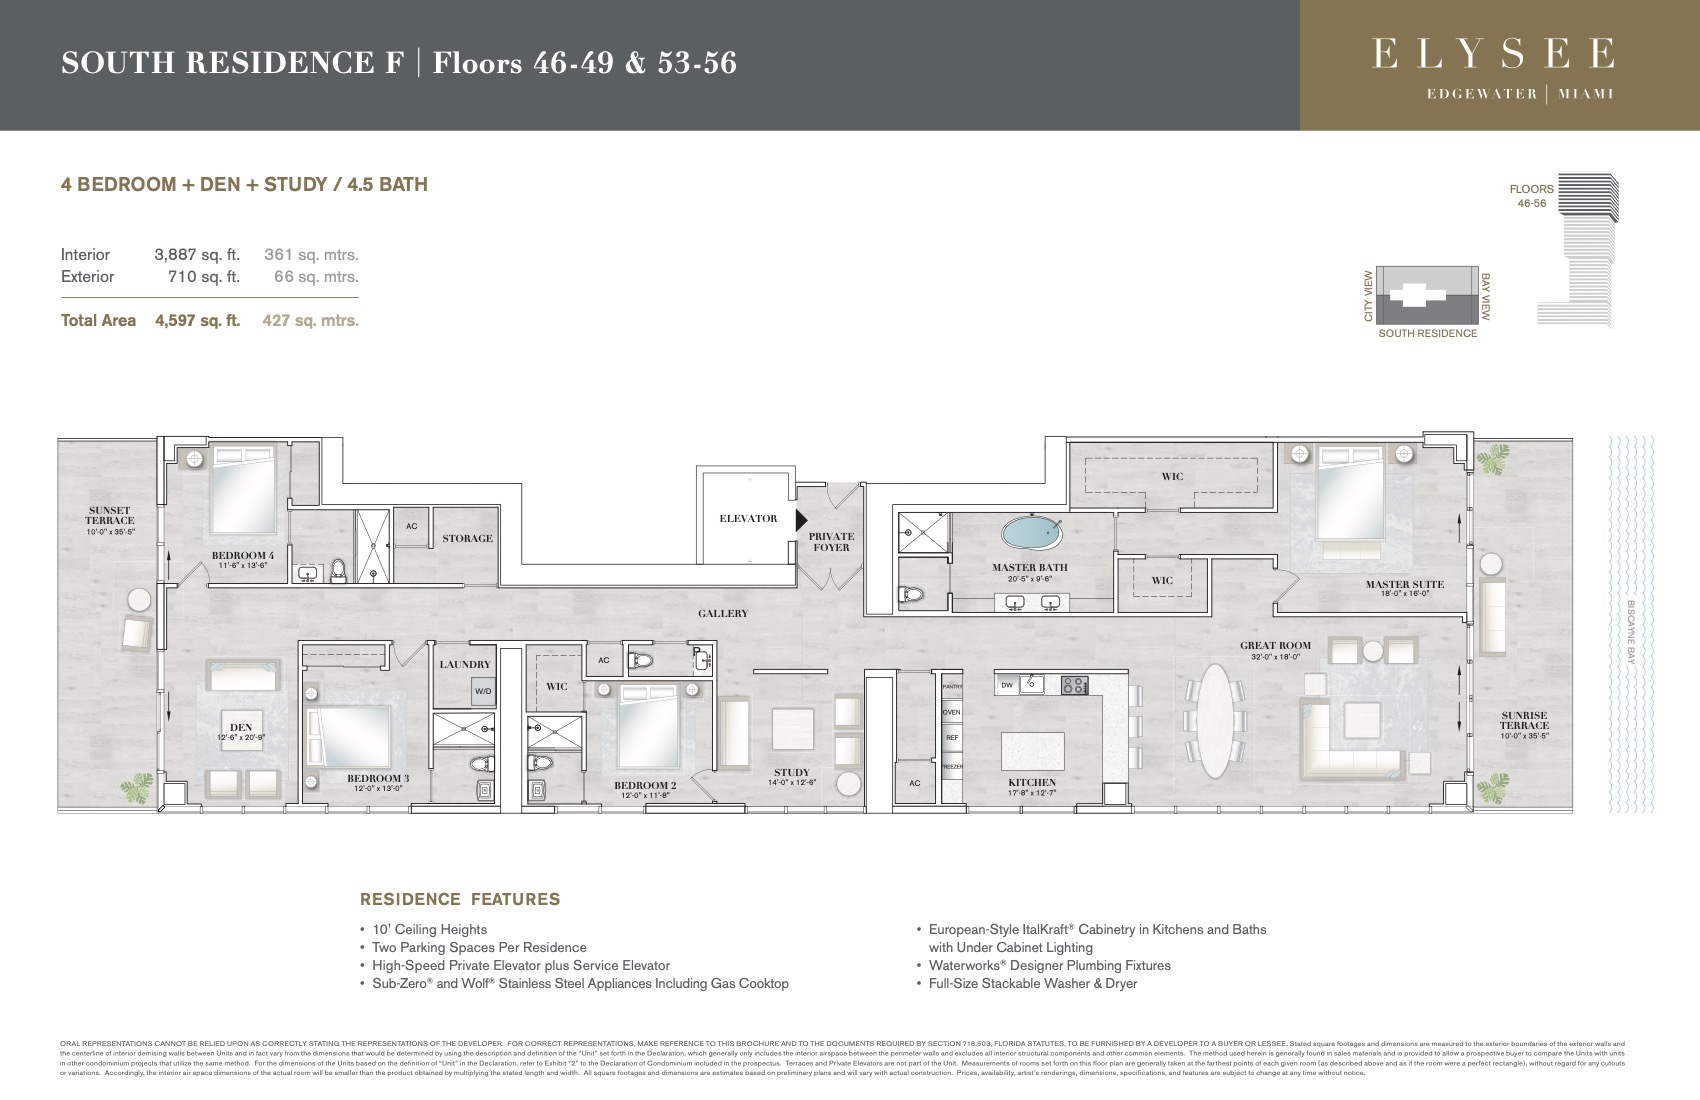 Floor Plan for Elysee Miami Floorplans, South Residence F